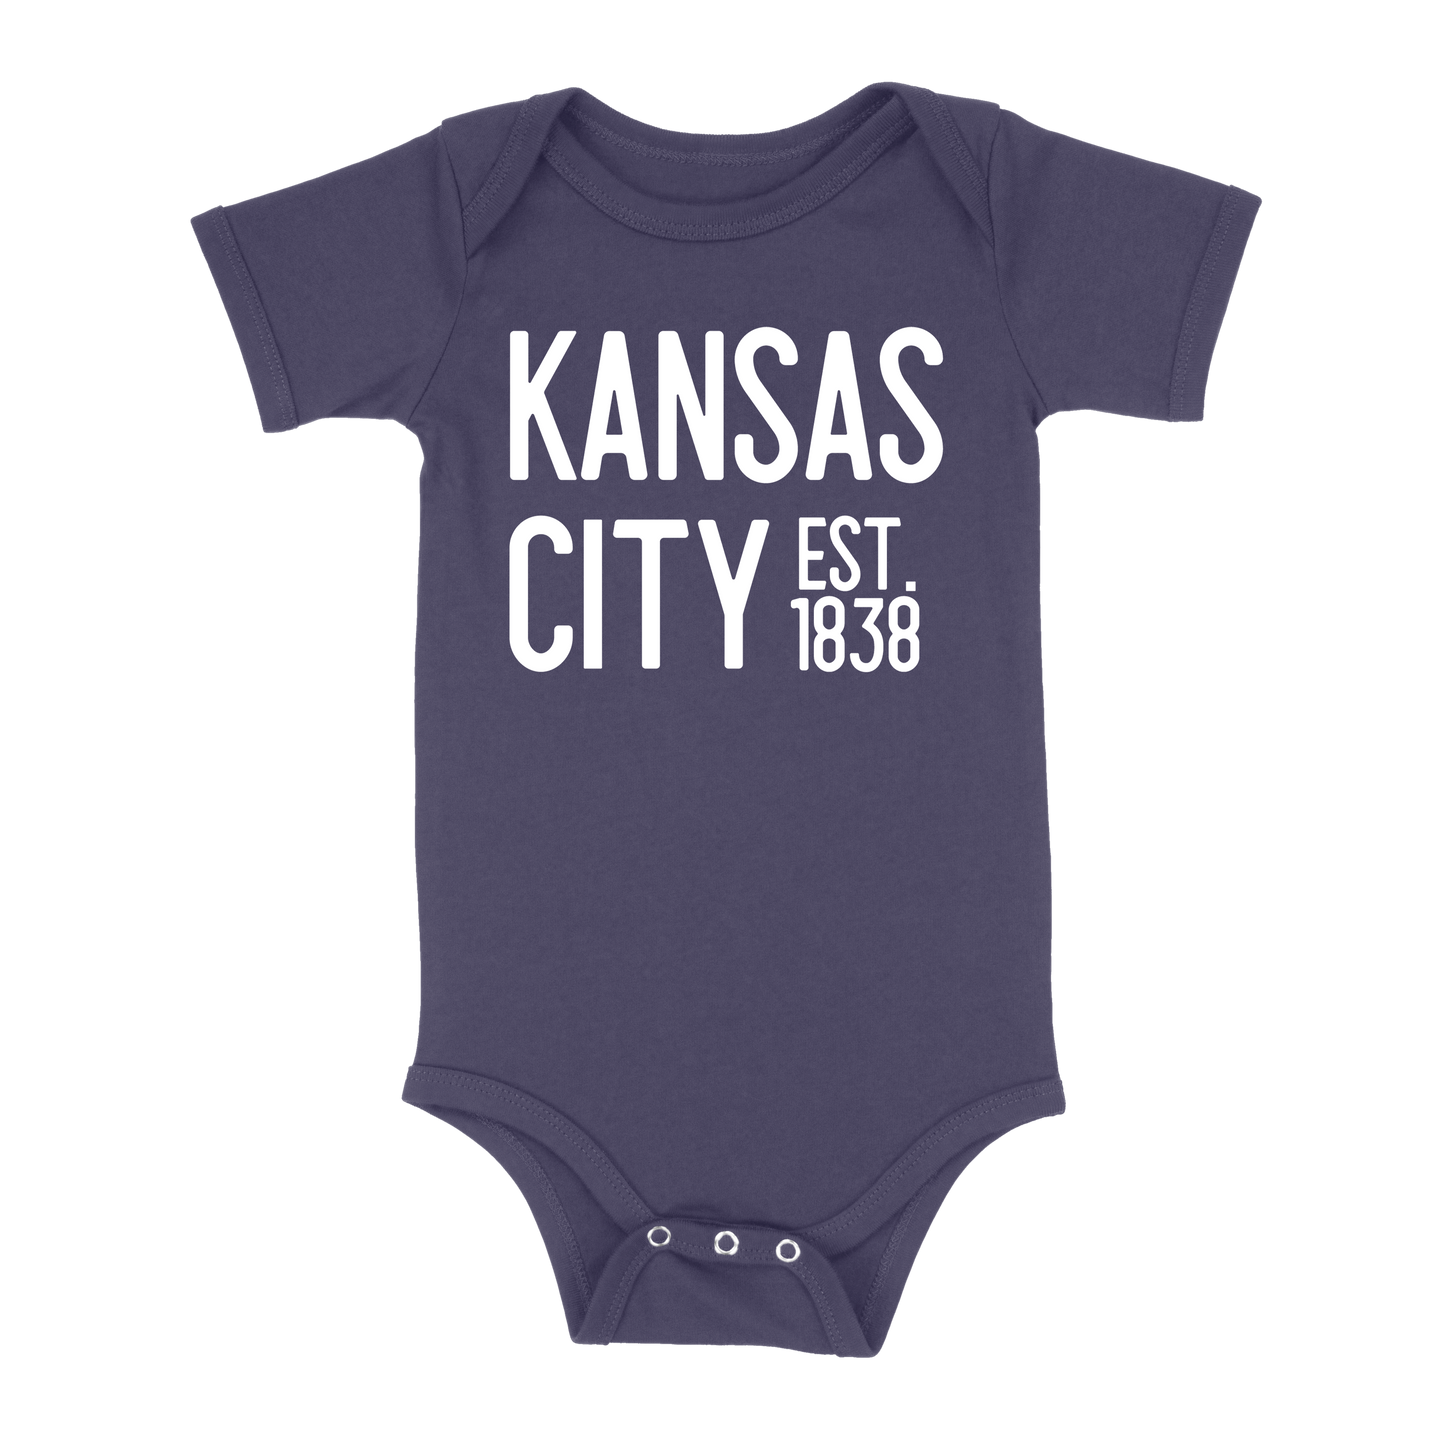 Kansas City EST 1838 Baby One Piece | Navy